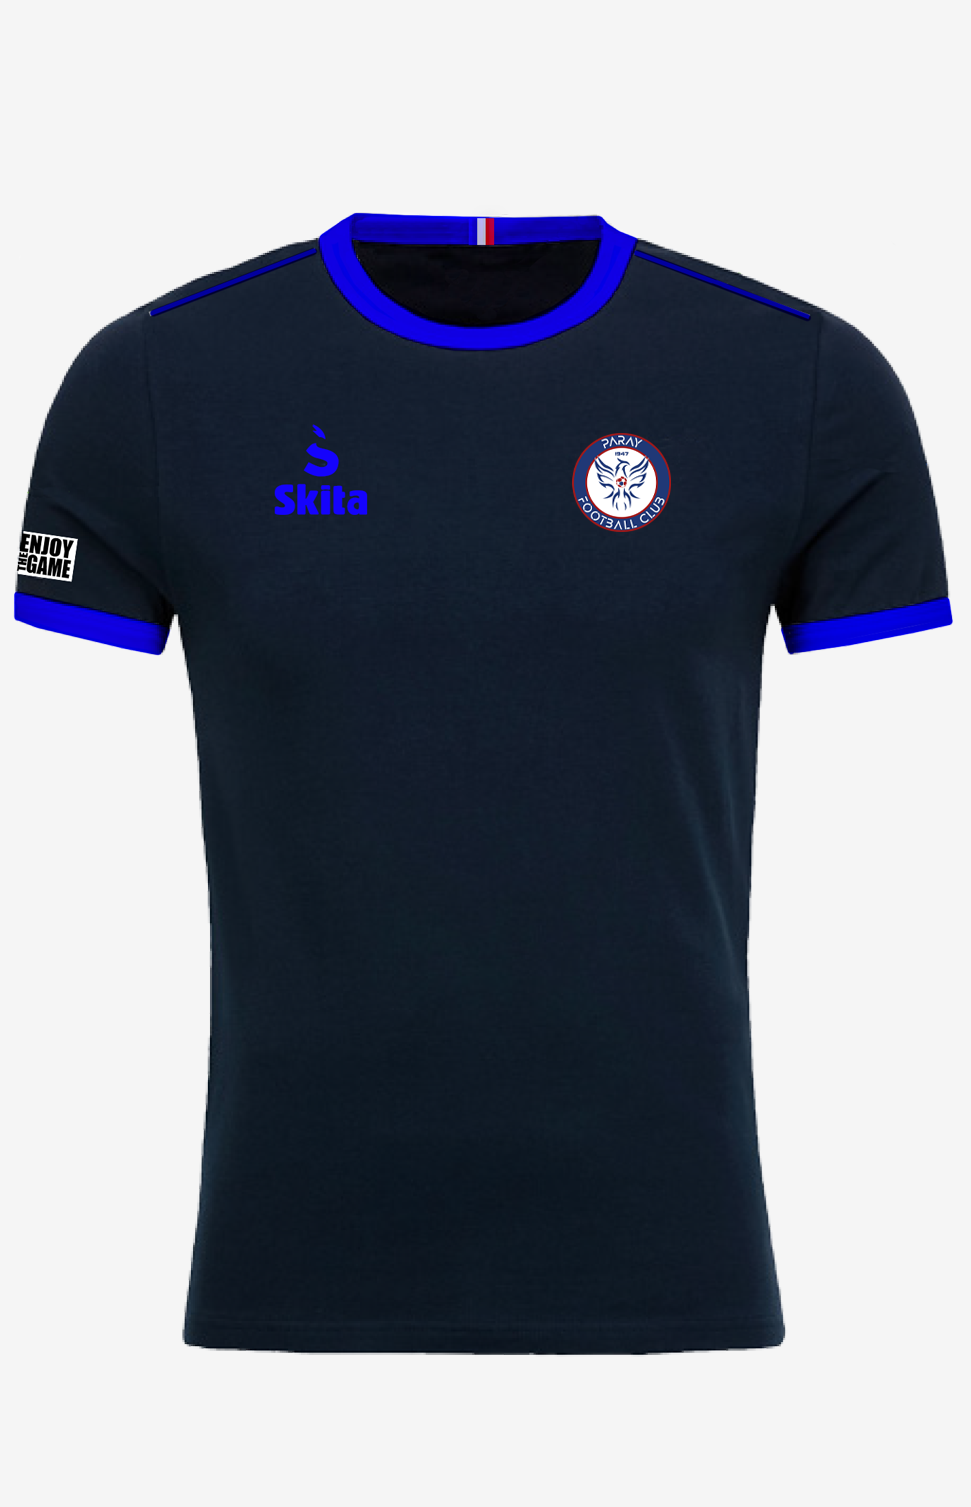 T-shirt de sortie (Paray FC)